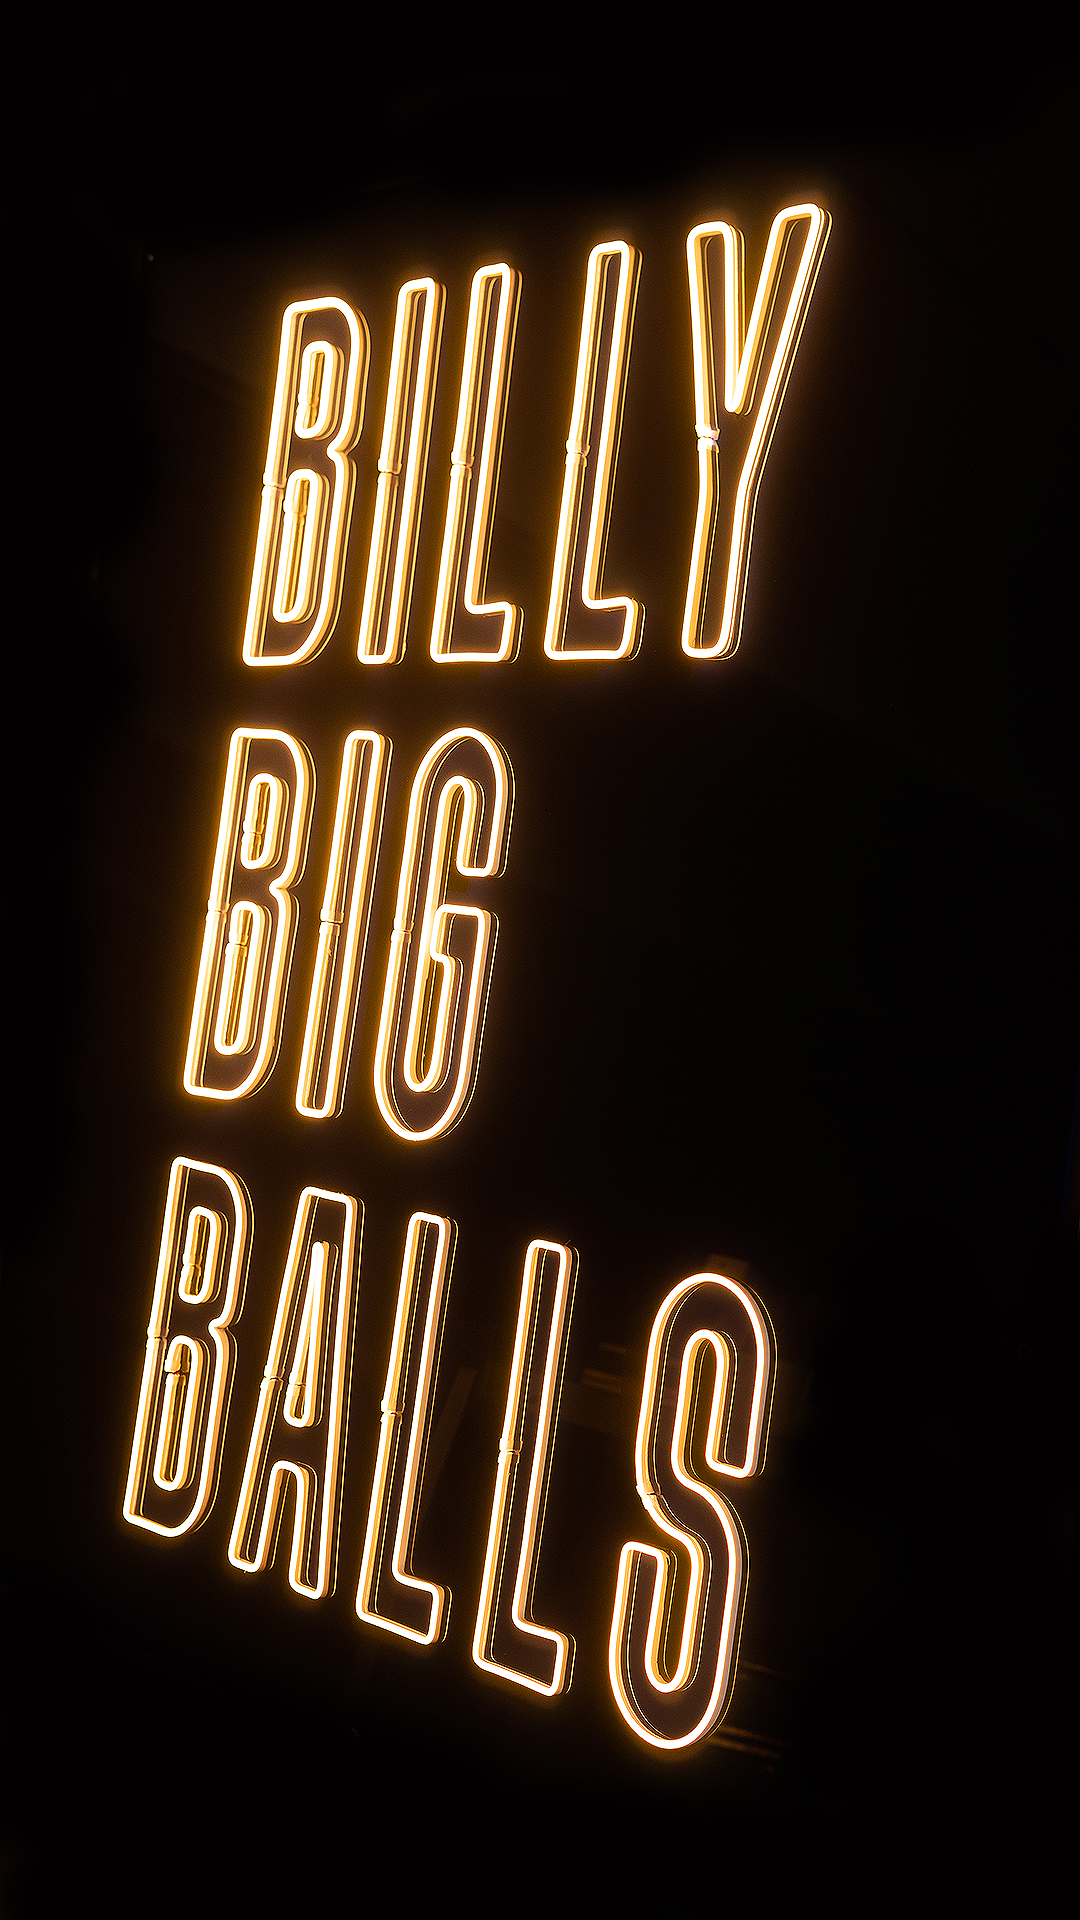 ellis-signs-billy-big-balls-neon-sign-newcastle-gateshead-north-east